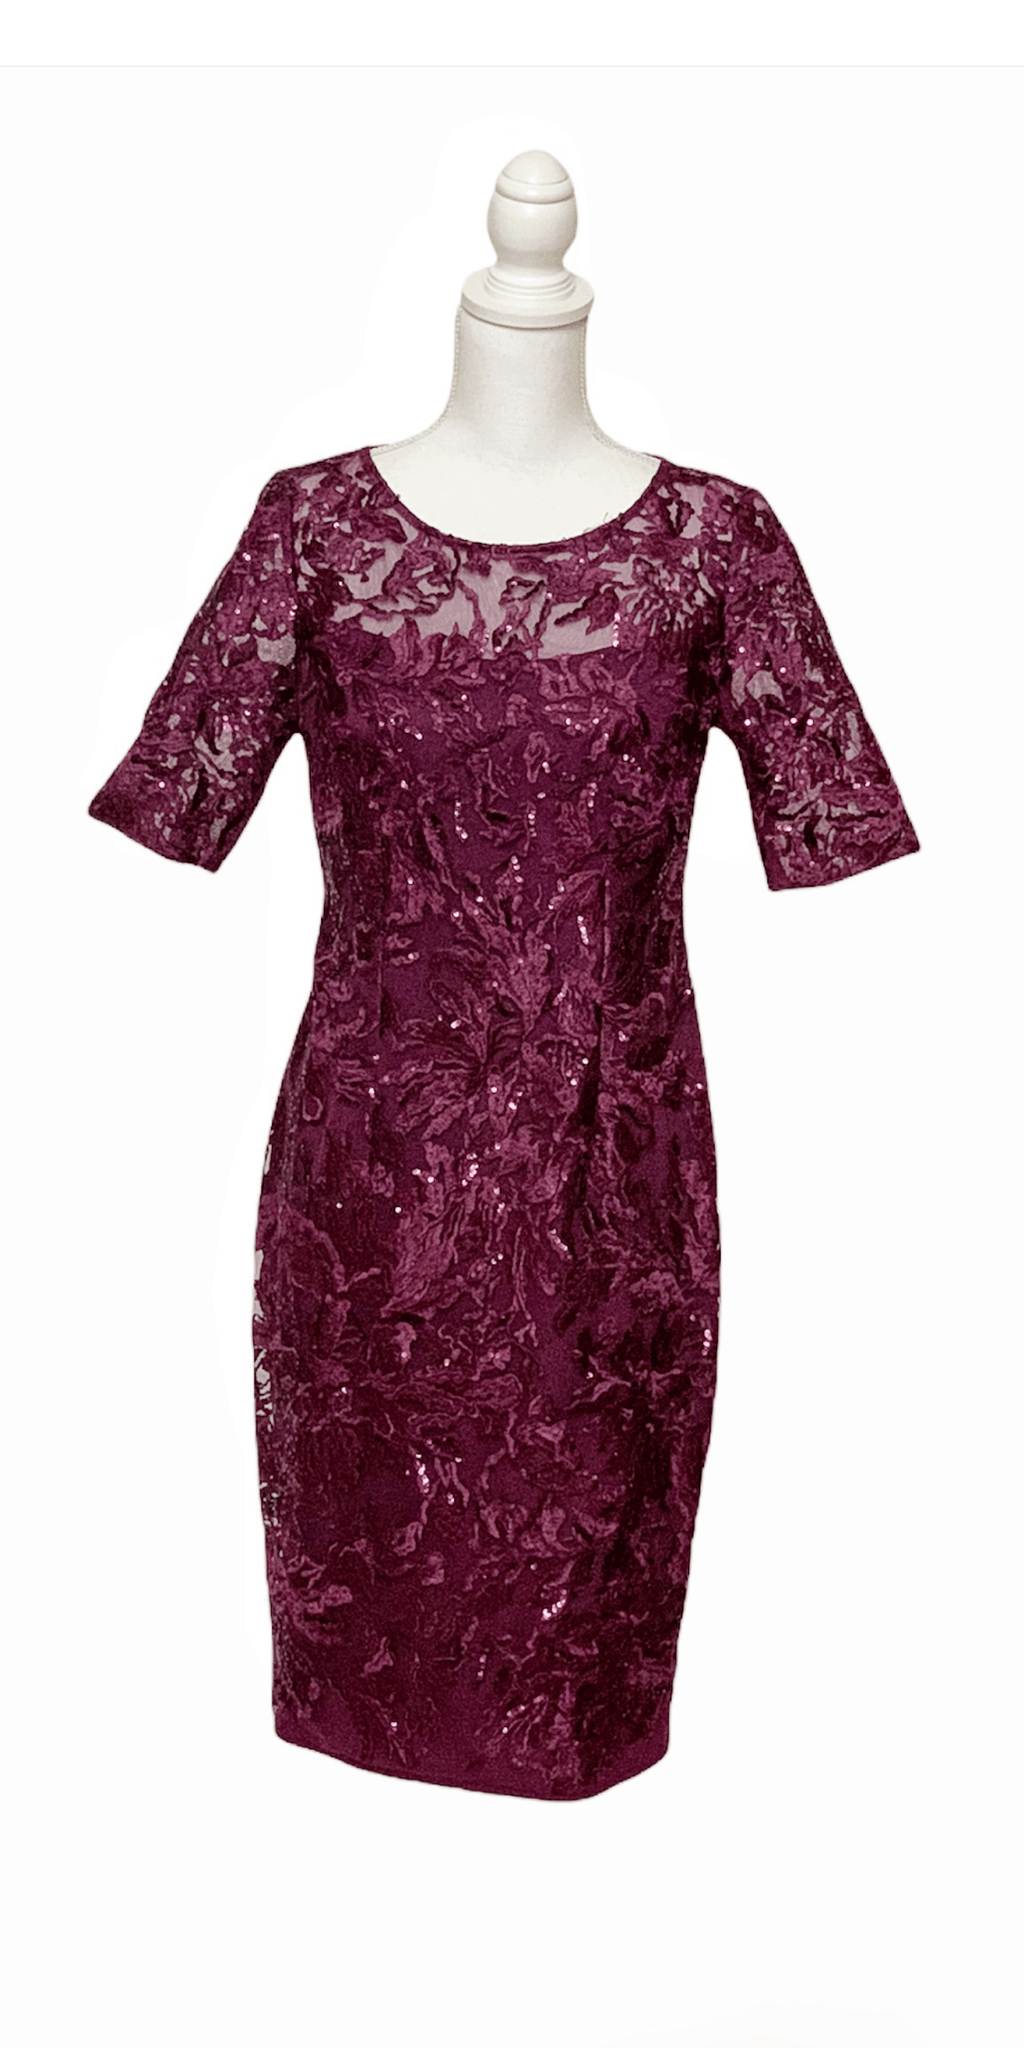 Rosette Shift Dress - Simply Borrowed Dresses